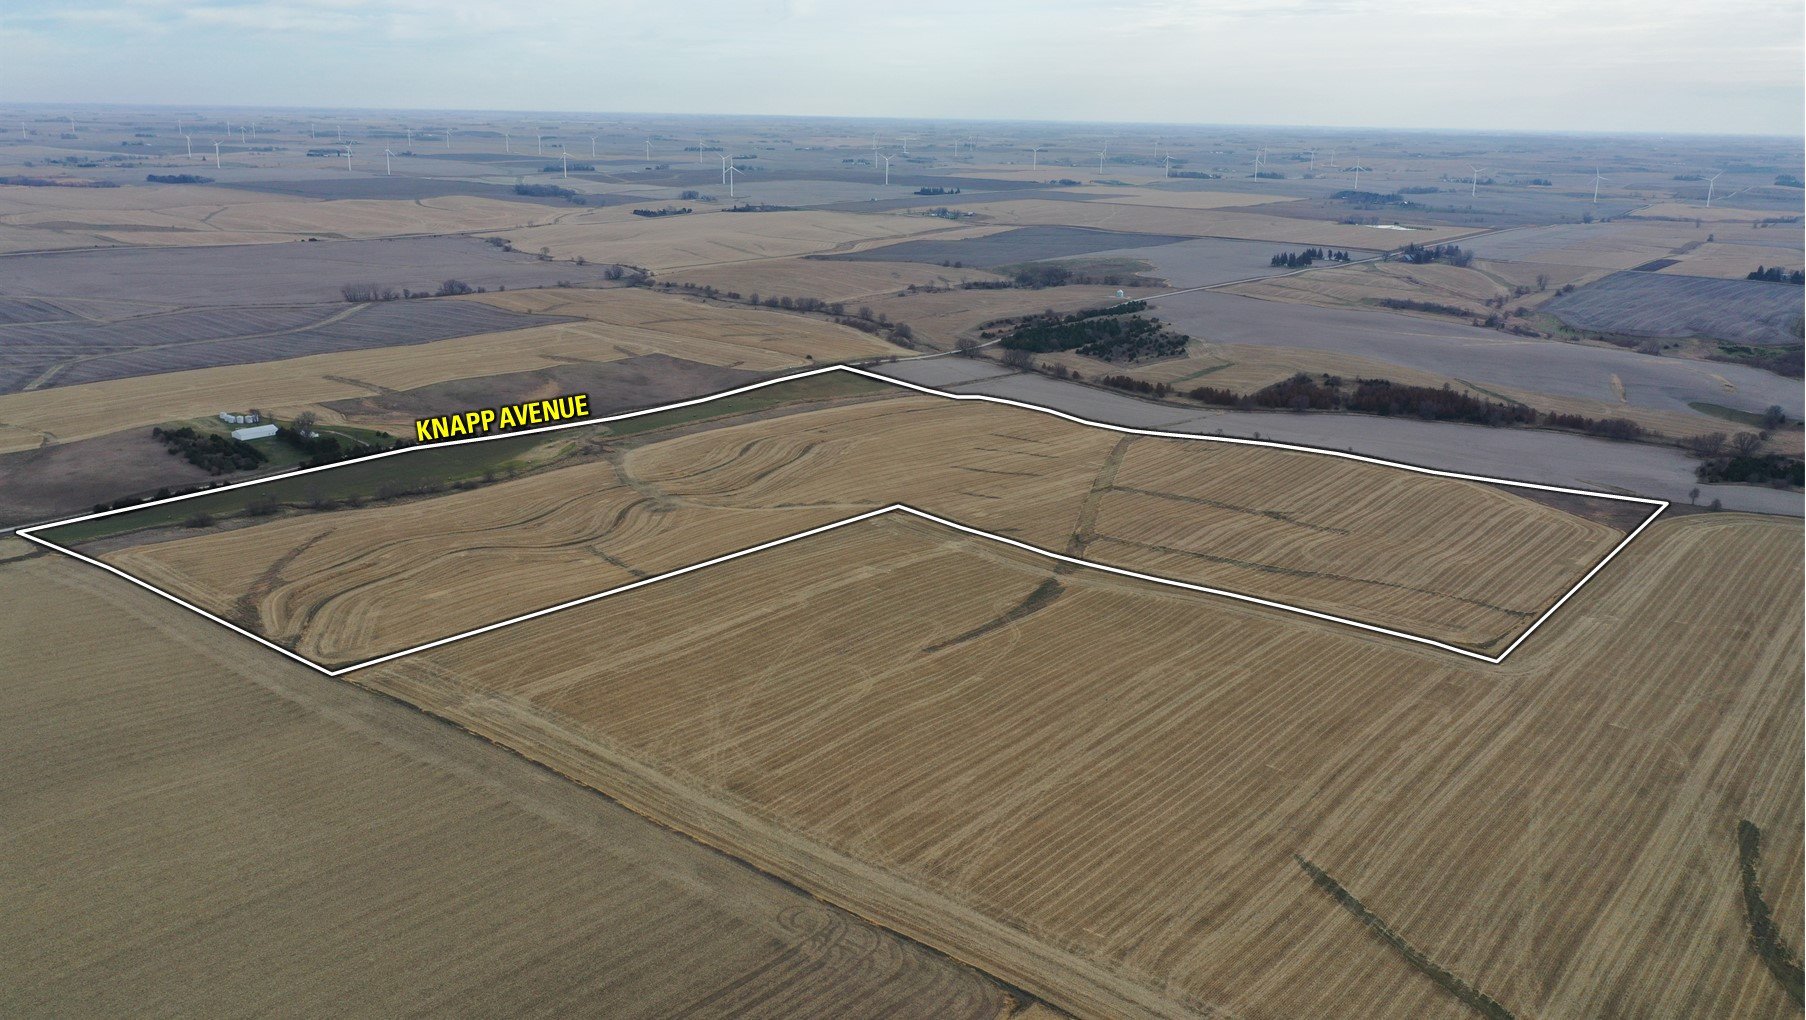 Marshall County Iowa Farmland For Sale 